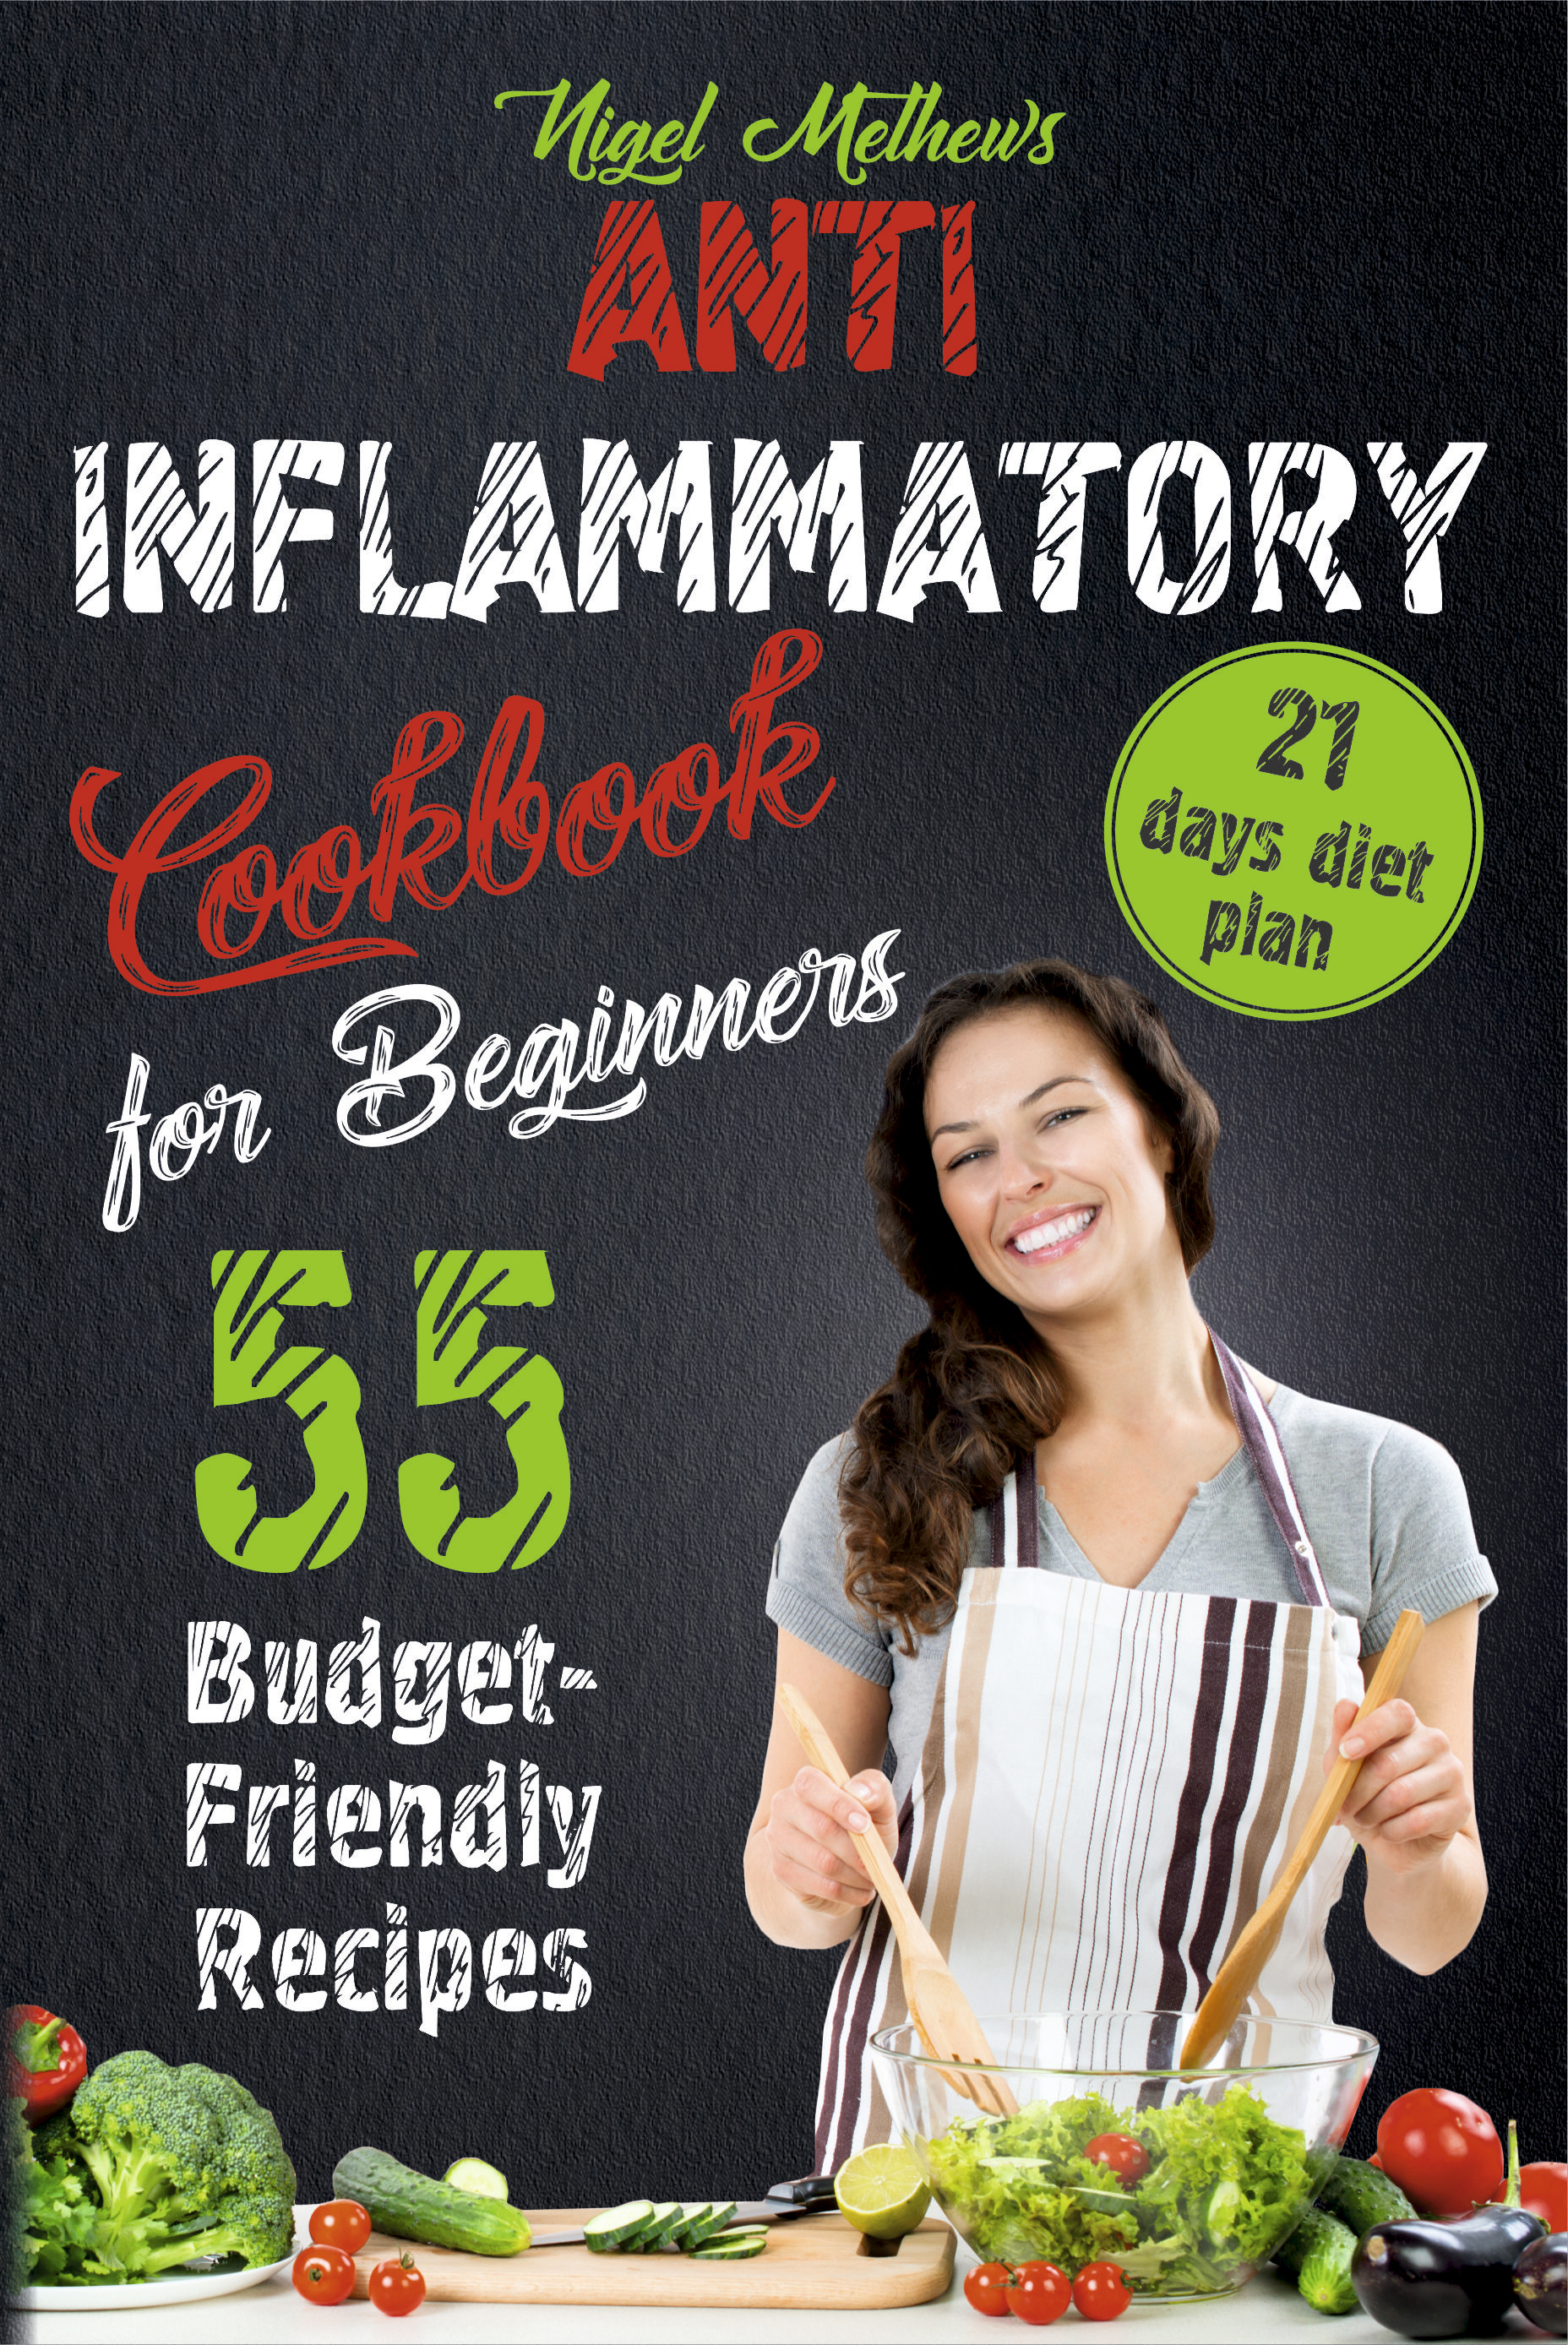 FREE: Anti Inflammatory Cookbook for Beginners: 55 Budget-Friendly Recipes. 21 Days Diet Plan by Nigel Methews